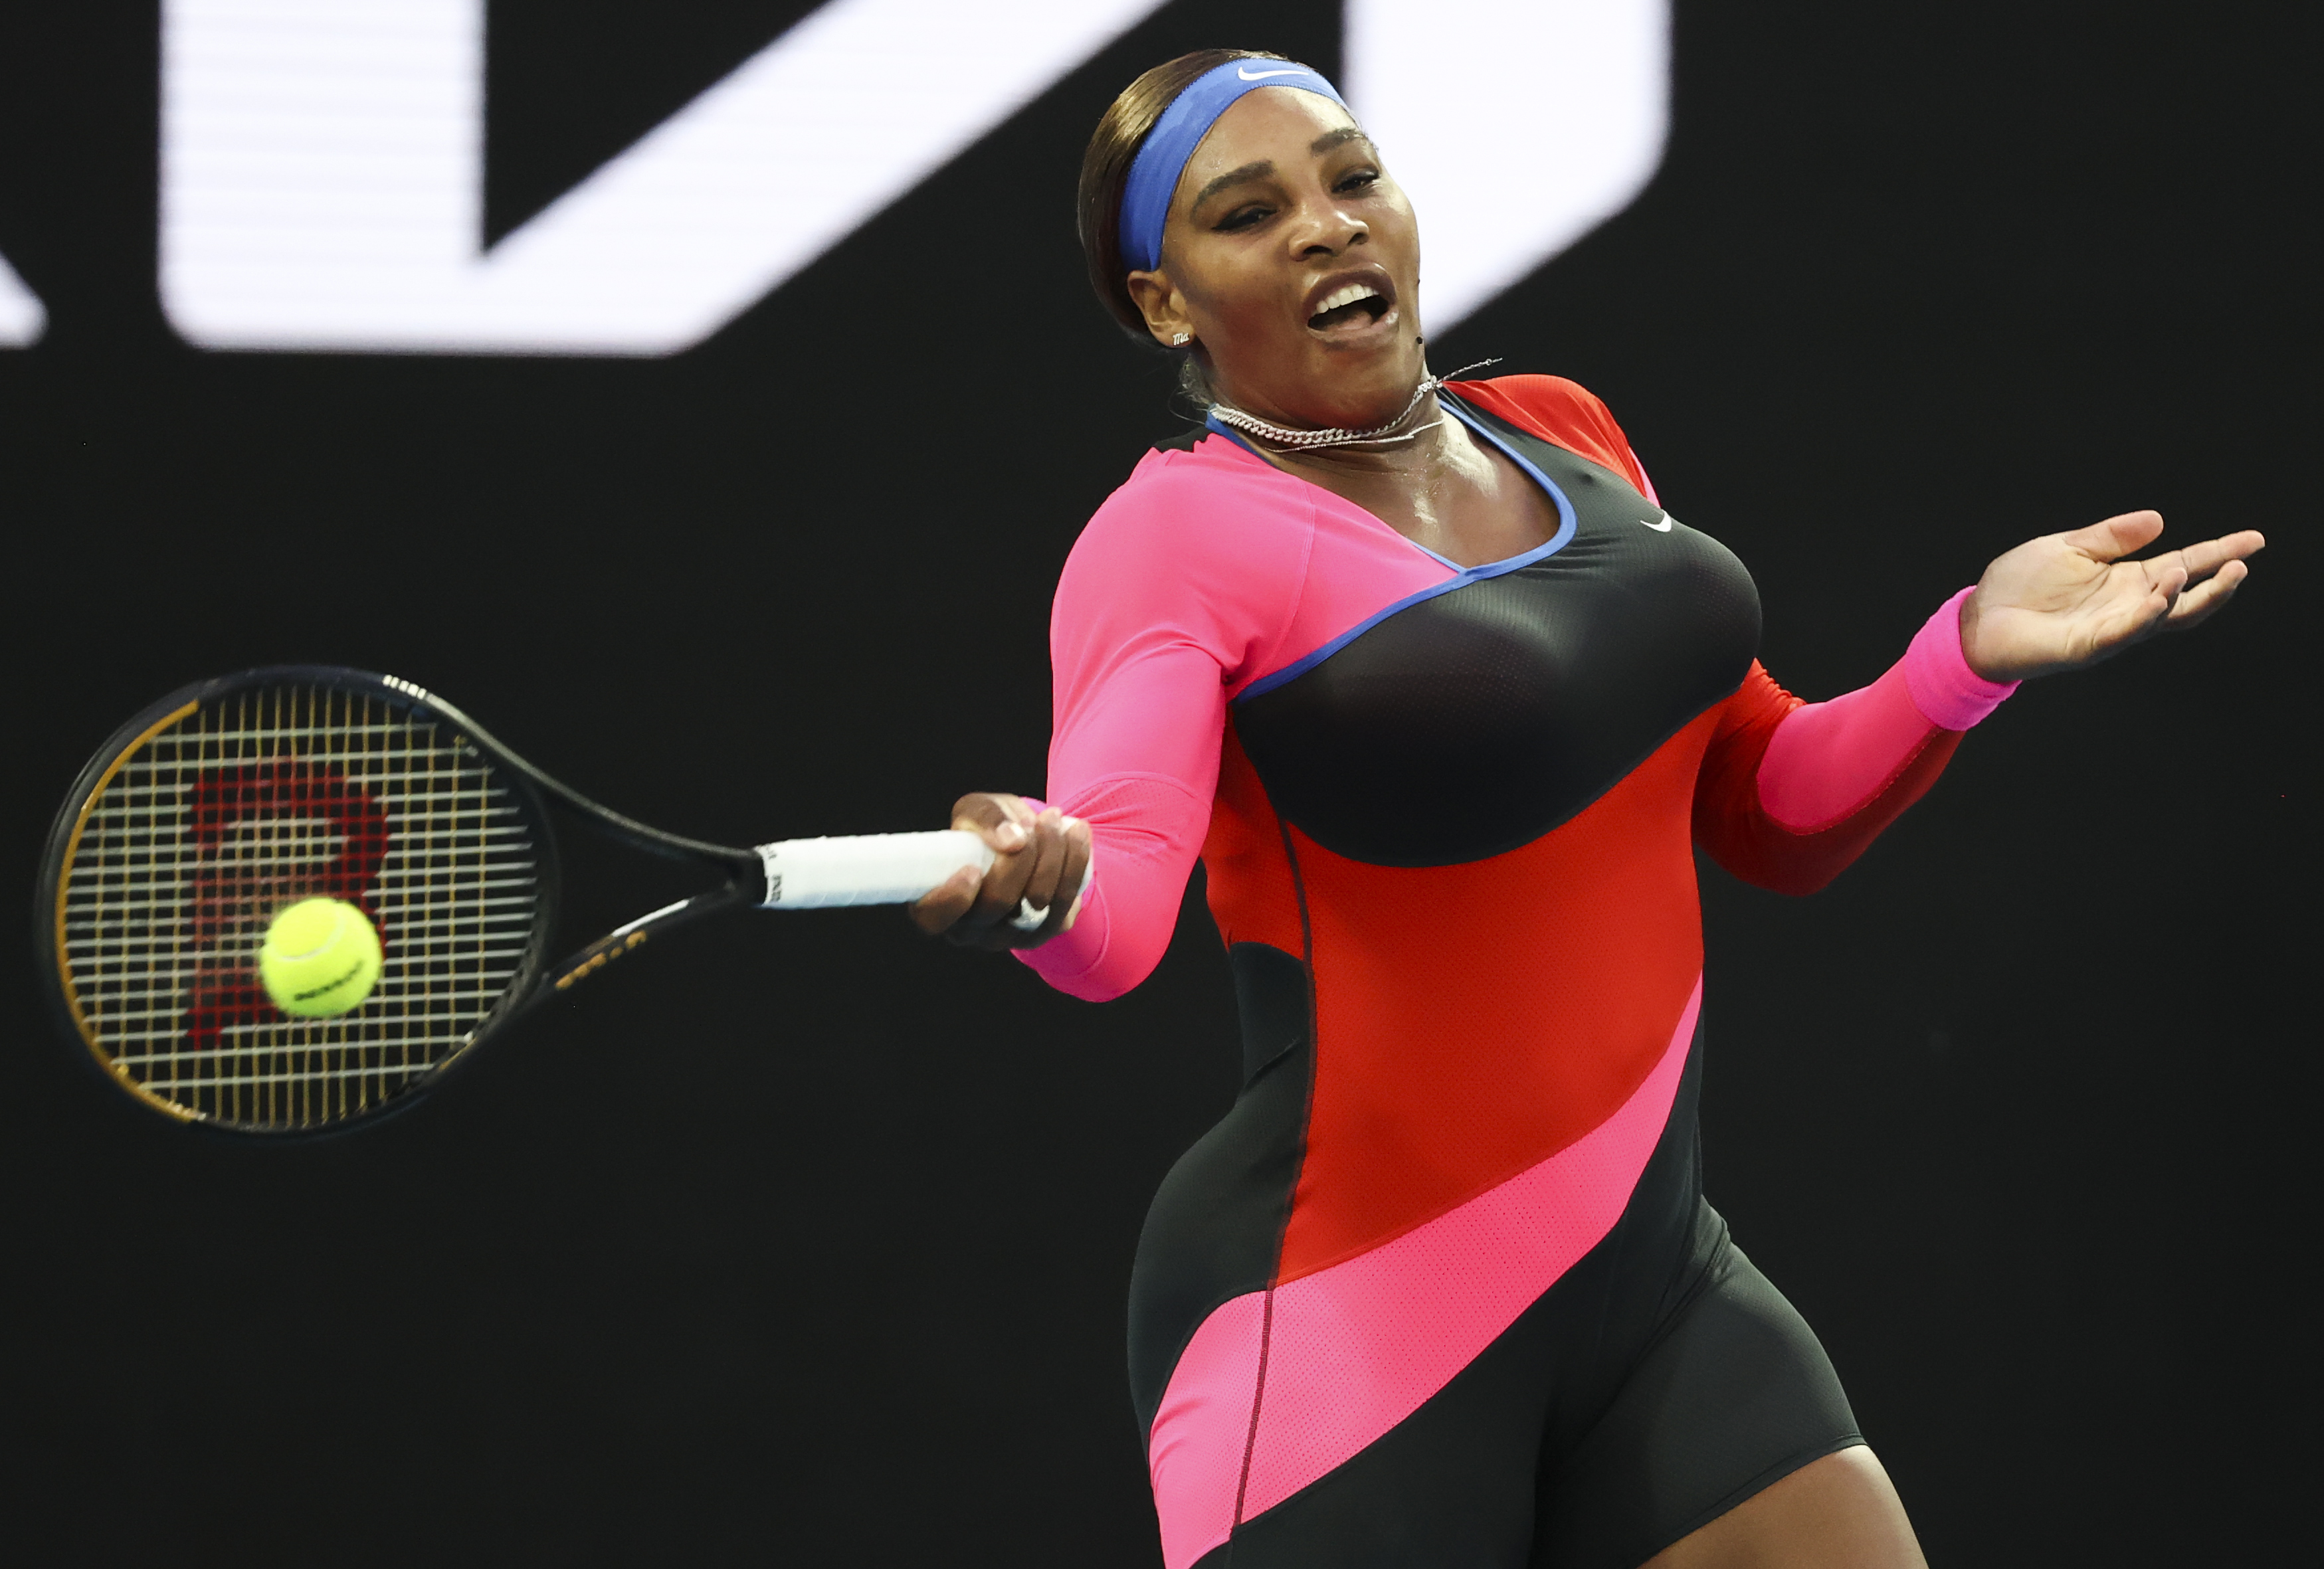 Australian Open 2021 Semifinals FREE LIVE STREAMS | Watch Serena Williams  vs. Naomi Osaka, Novak Djokovic, more online | Time, TV, channel 